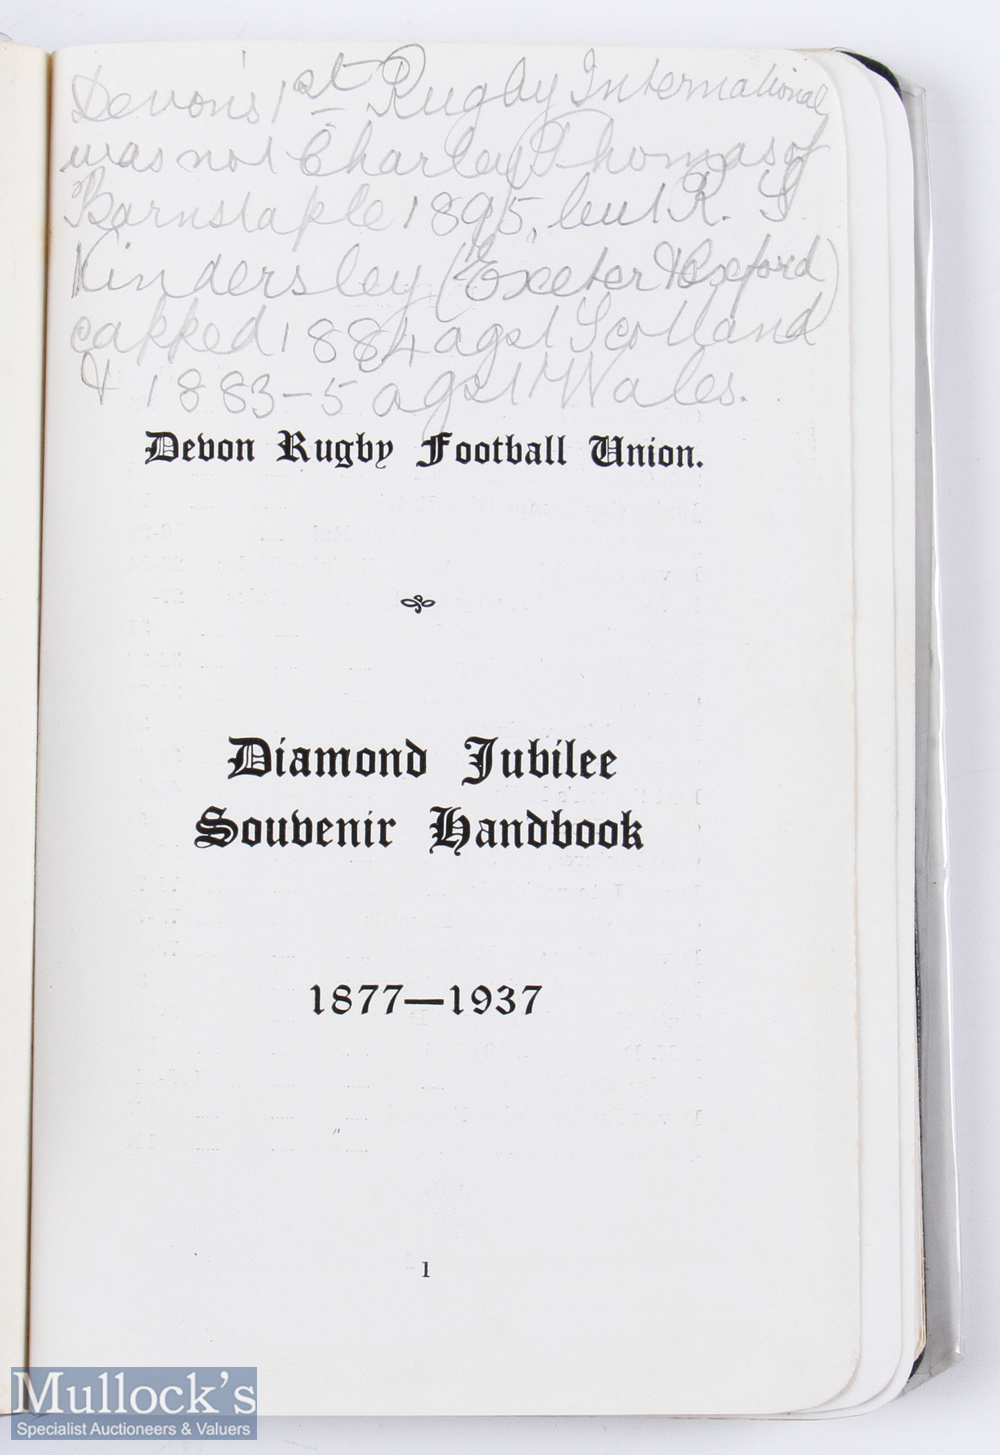 Rare 1937 Devon RU Diamond Jubilee Handbook: 5" x 3.5" leatherette with gilt titles, a carefully - Image 2 of 2